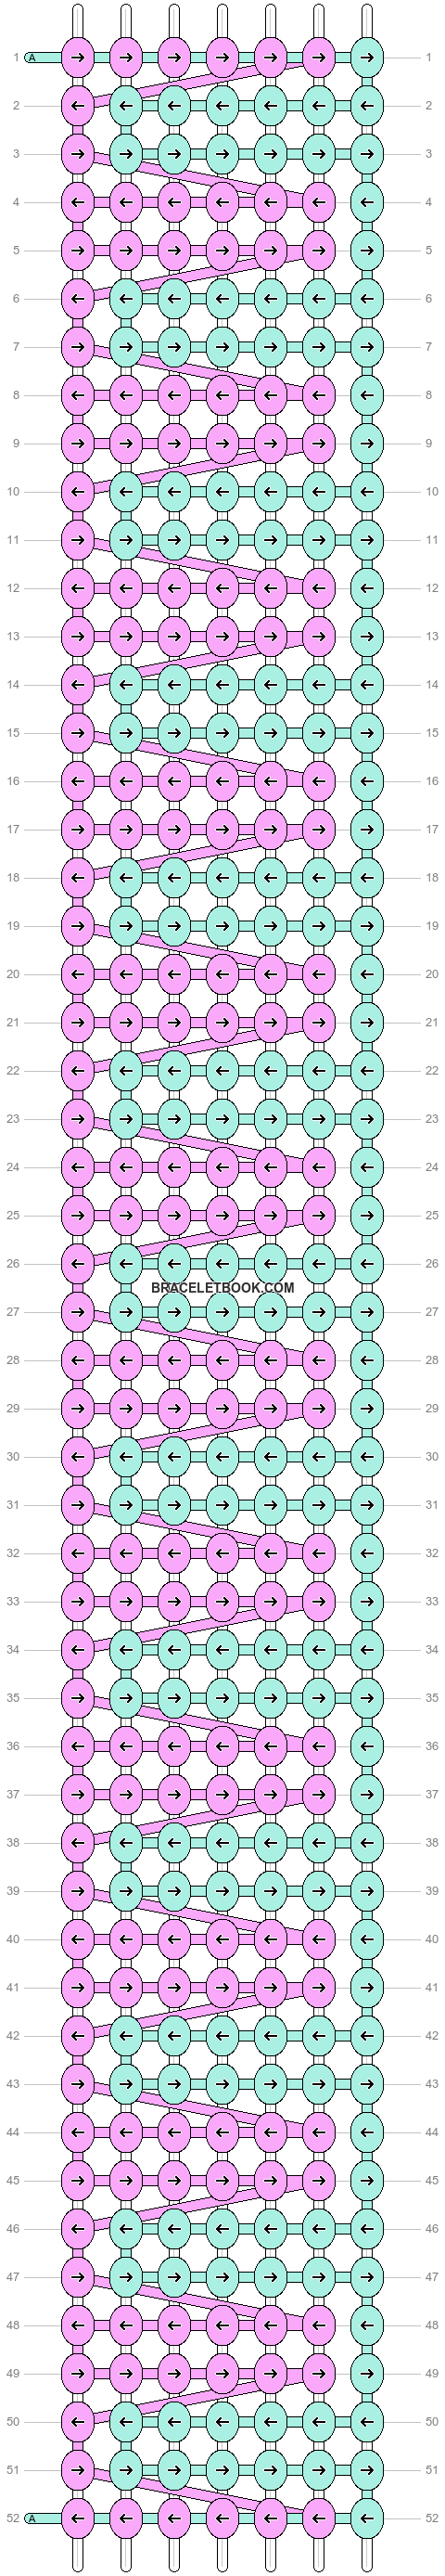 Alpha pattern #15234 variation #100606 pattern